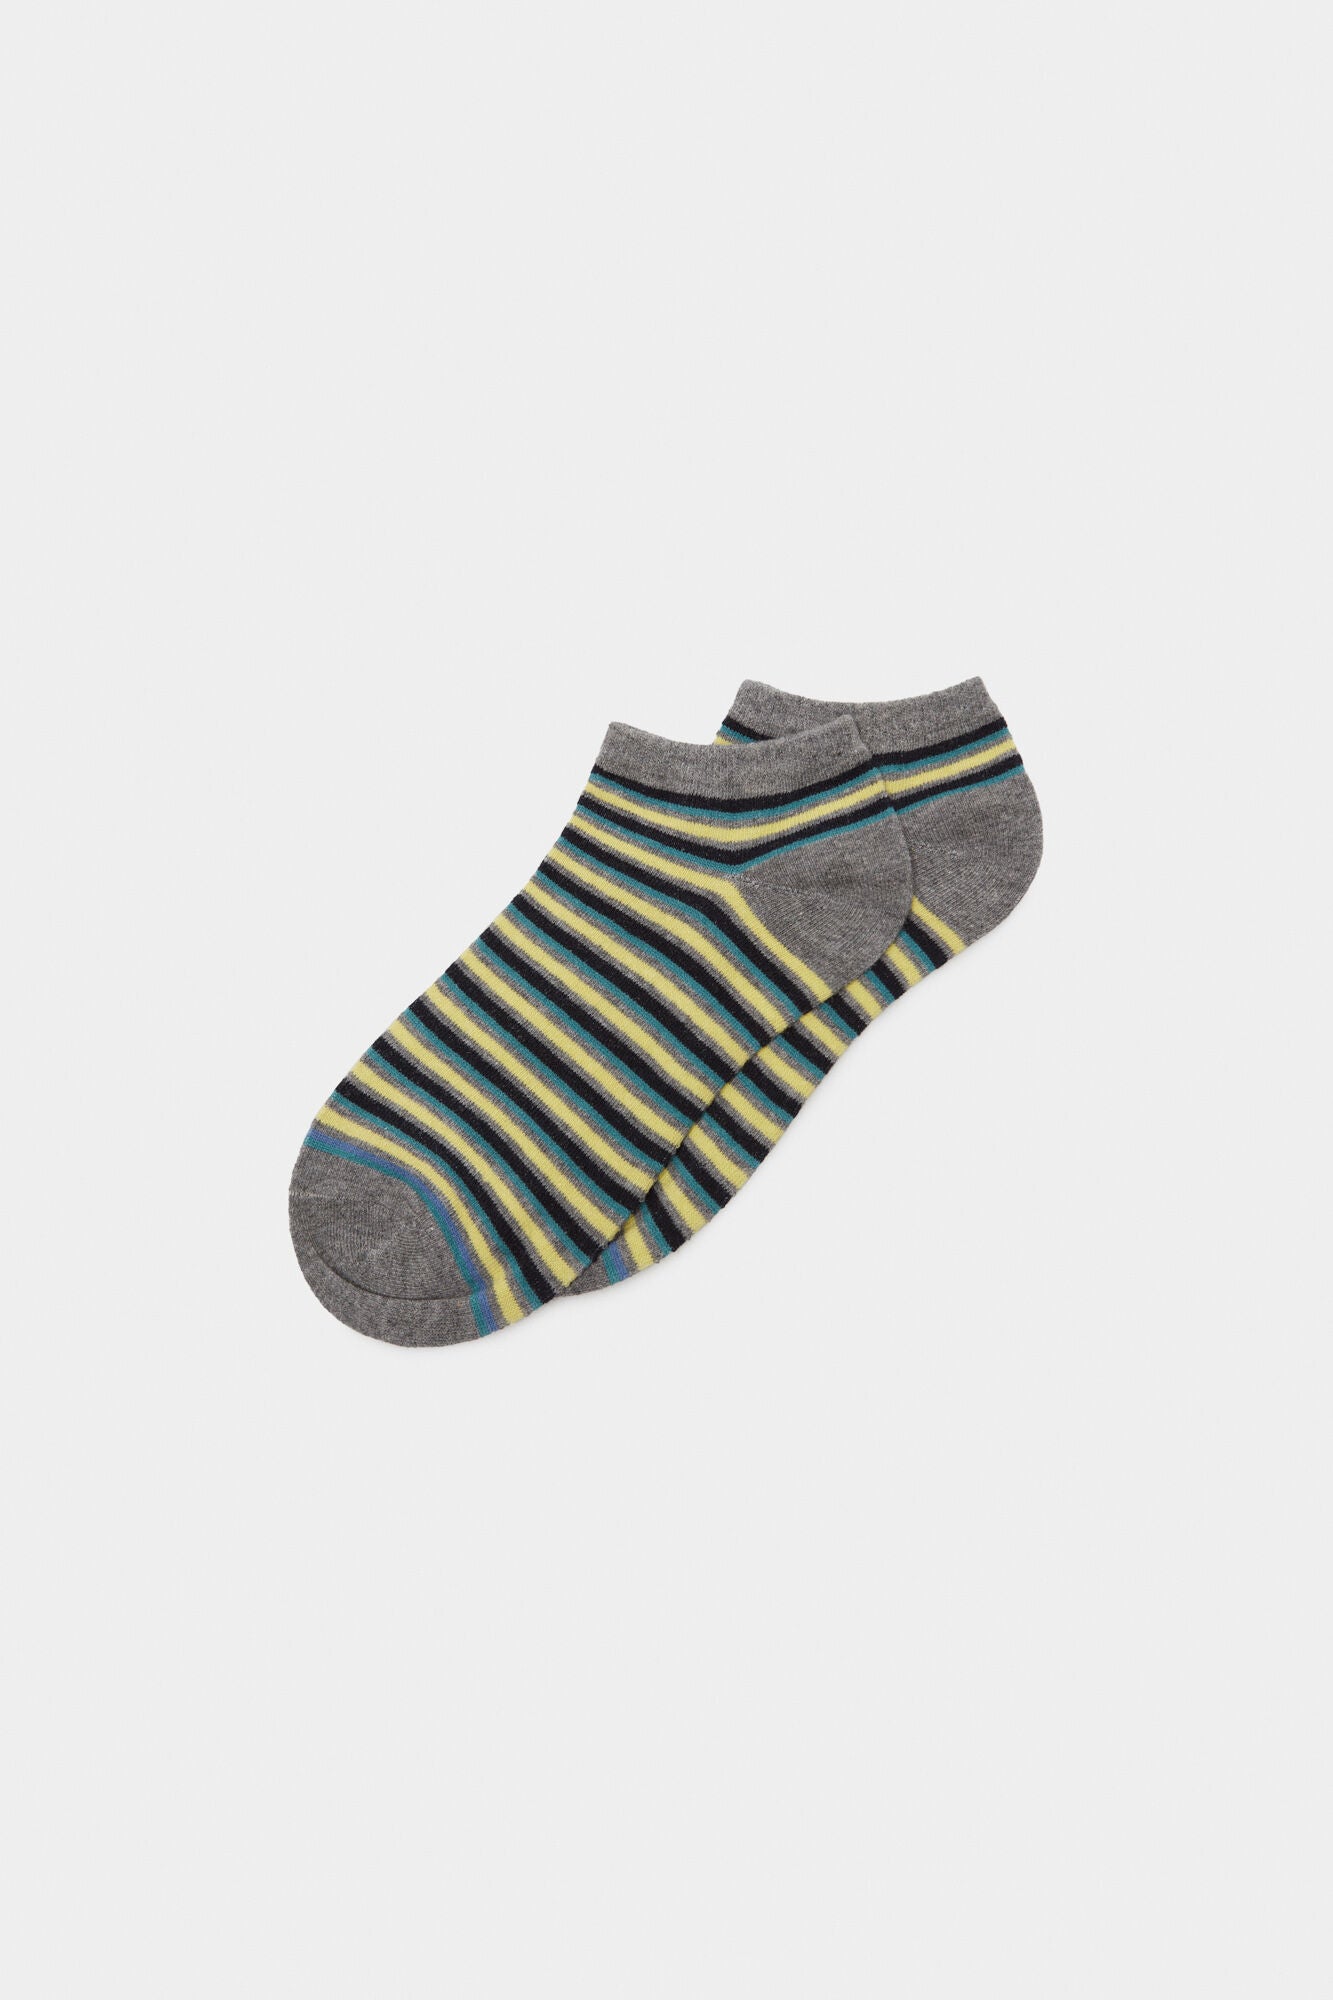 Grey Stripe Ankle Fancy Socks - 1 pair